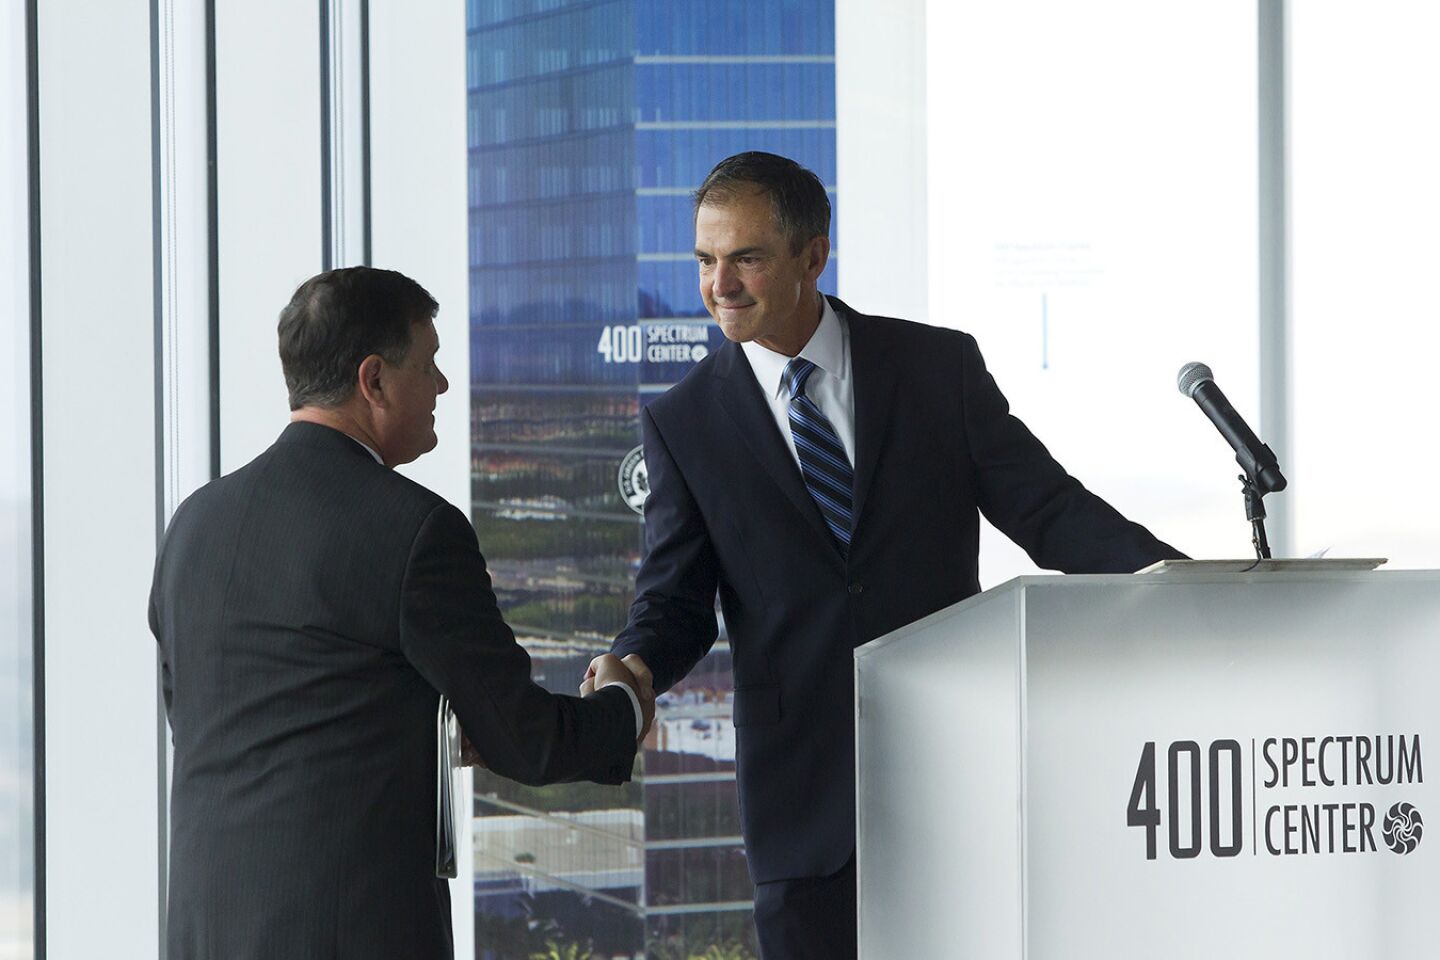 Irvine Company's 400 Spectrum Center Drive opens